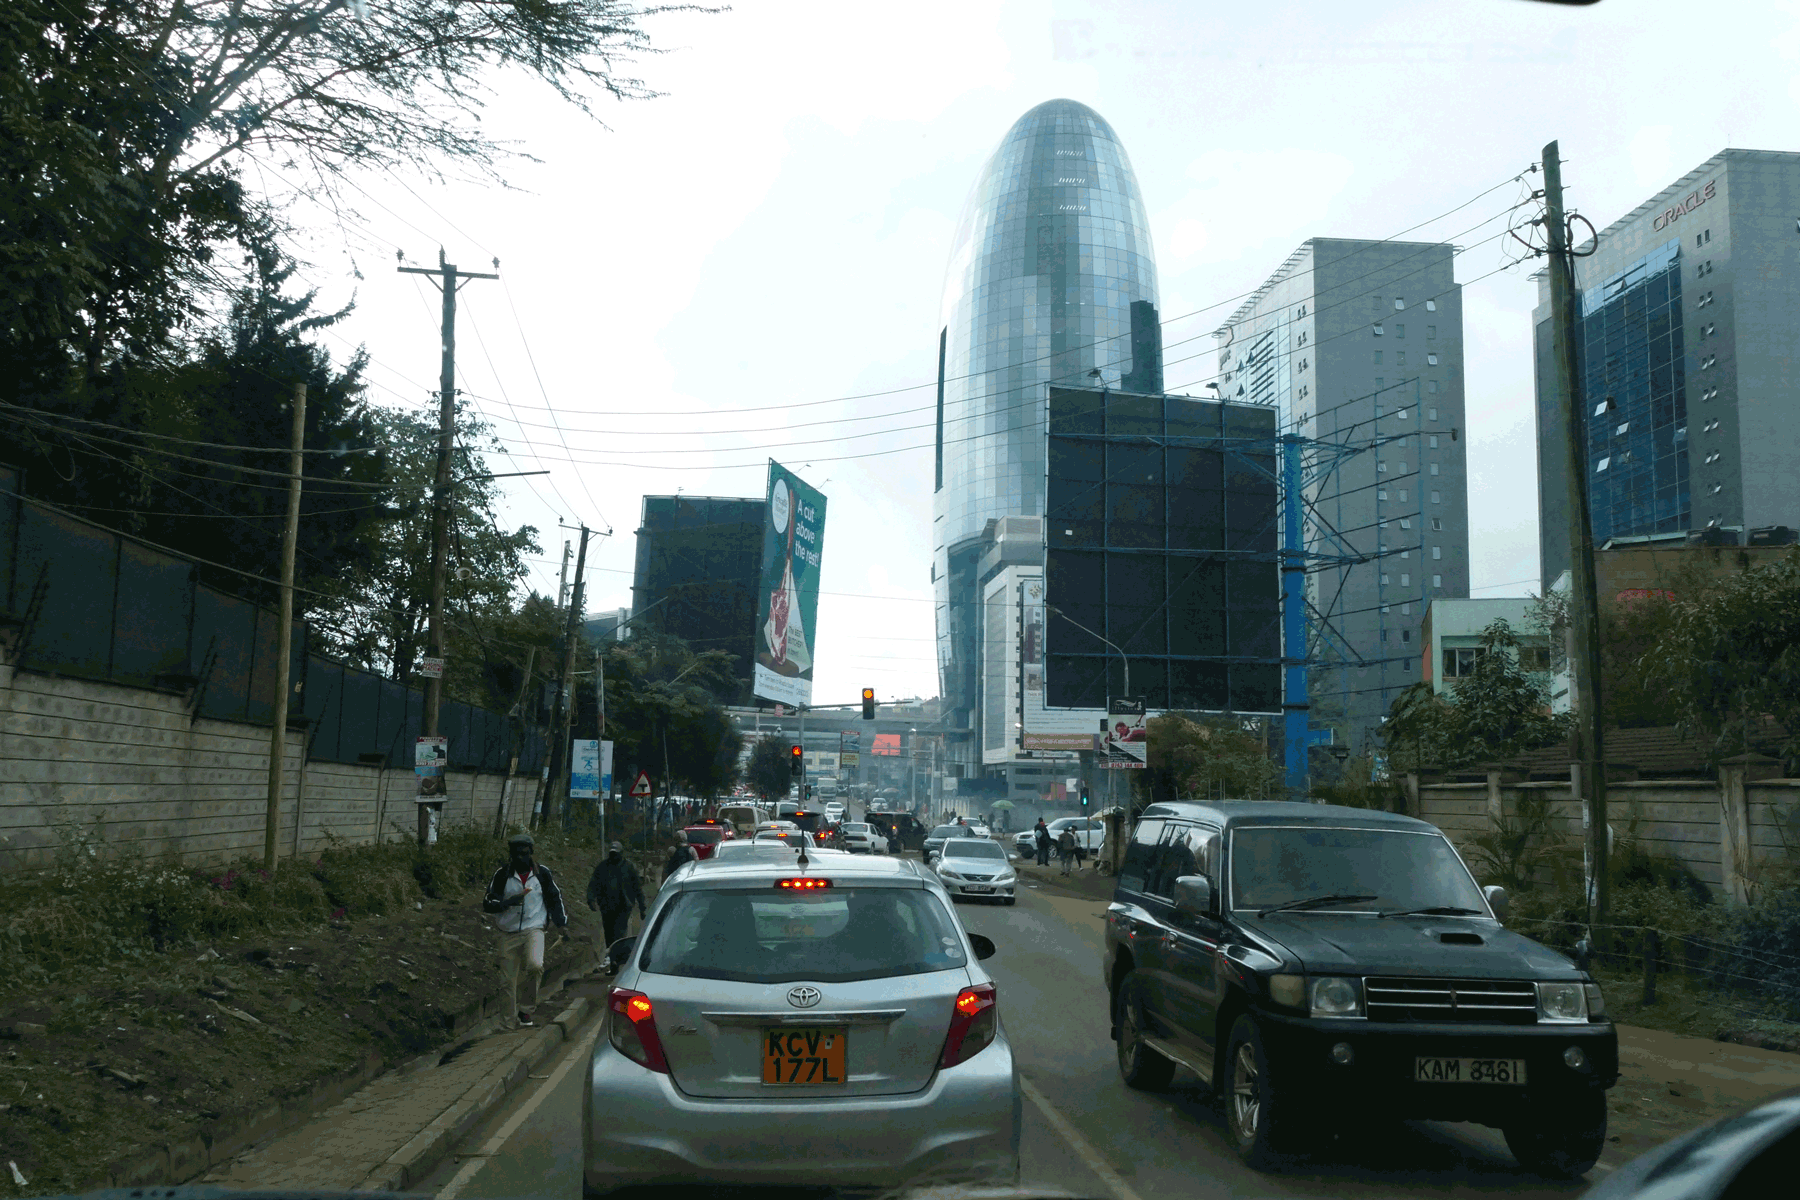 Photograph of a busy street in nairobi, kenya